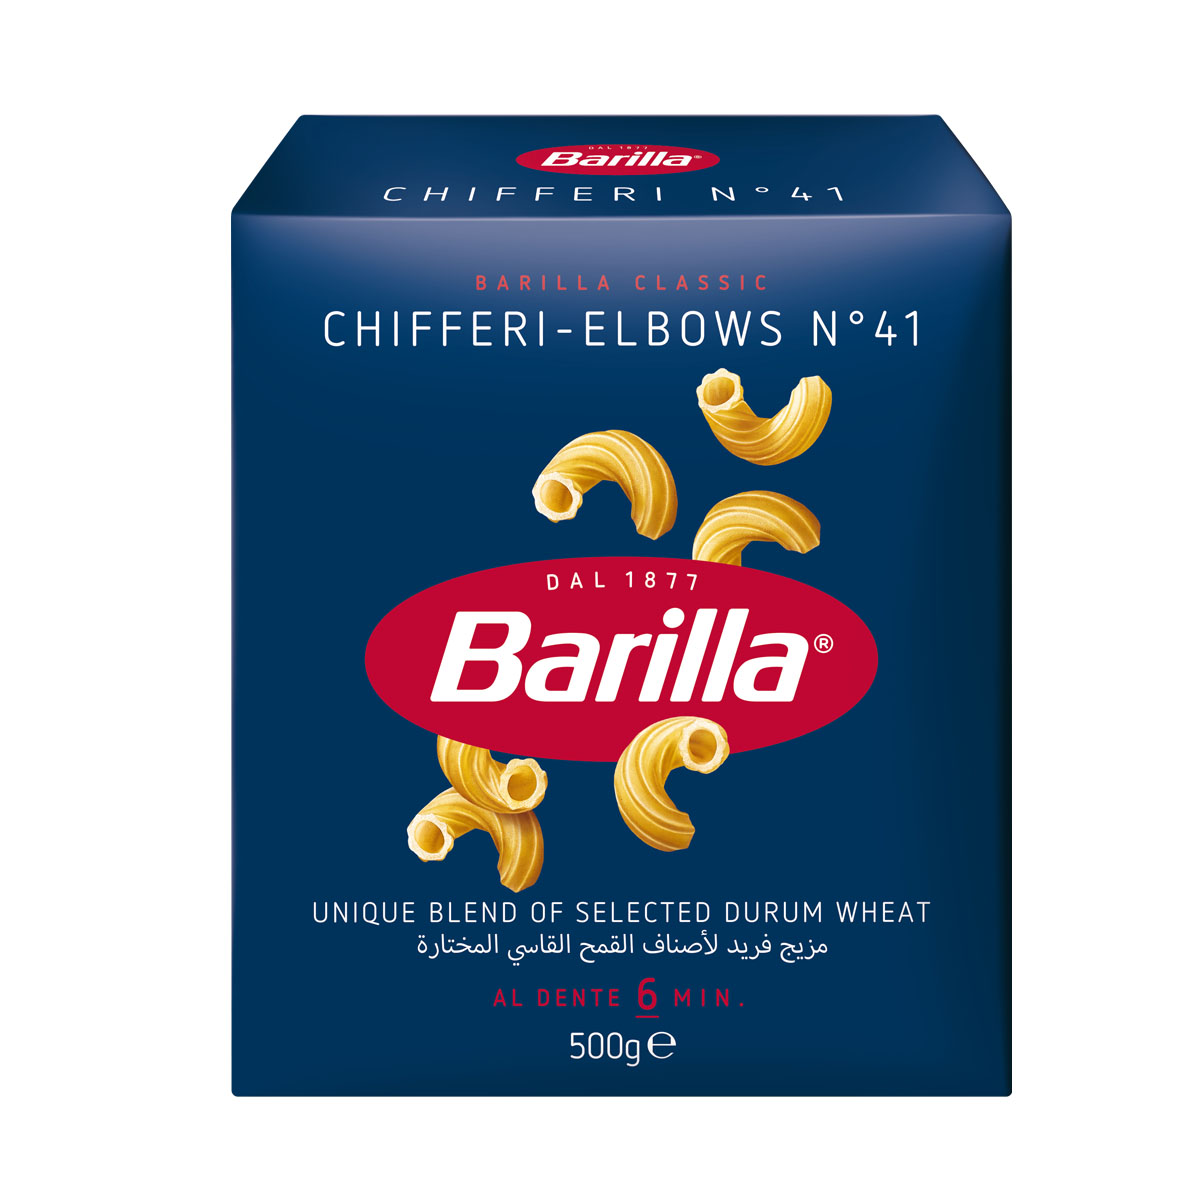 barilla chifferi elbows new